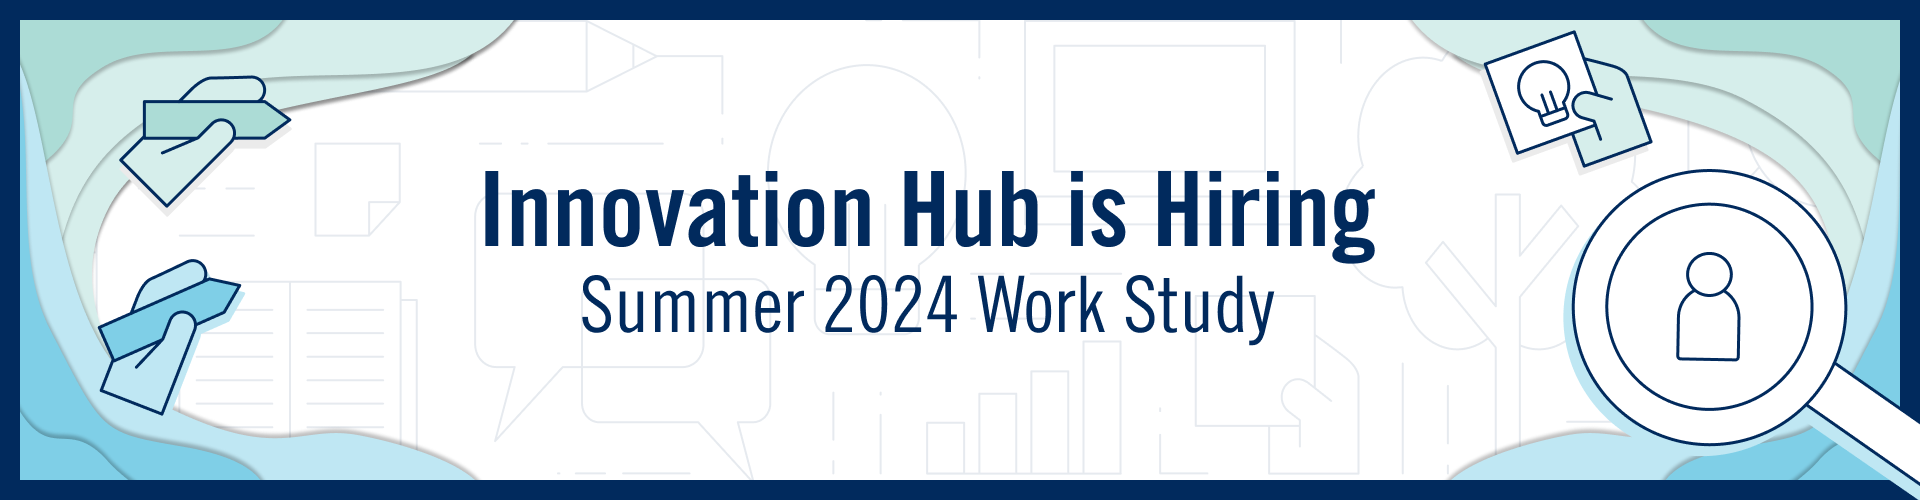 Innovation Hub Summer 2024 Work Study_1920x500